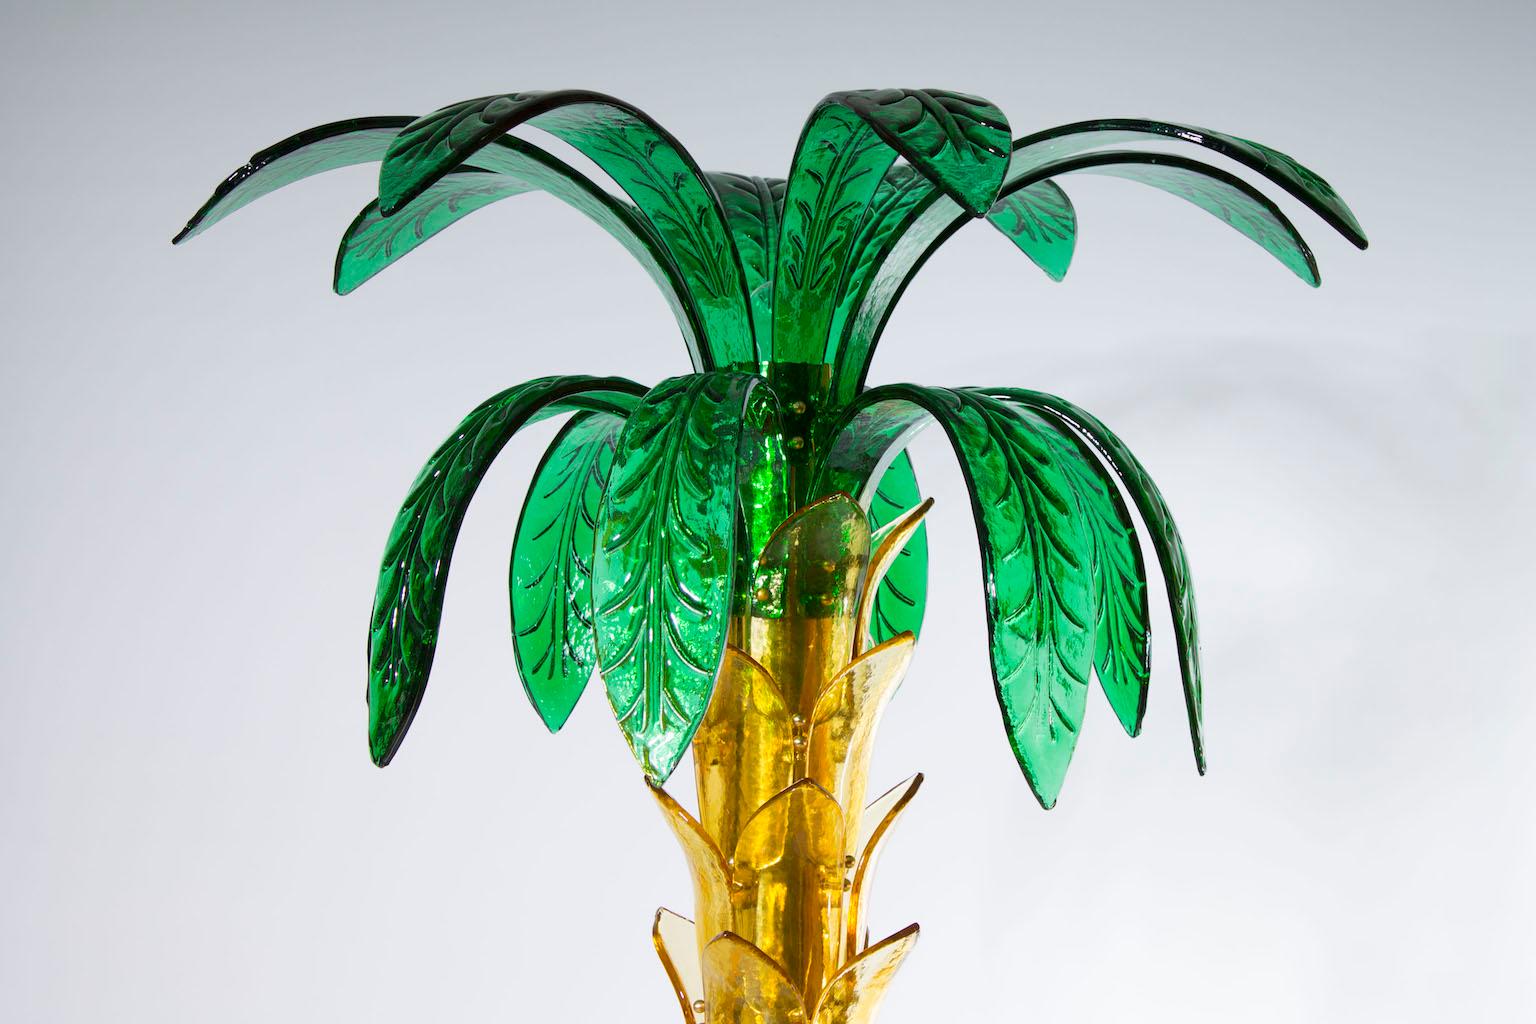 Laiton Lampadaire Palm en verre de Murano ambre et vert Italie contemporain  en vente